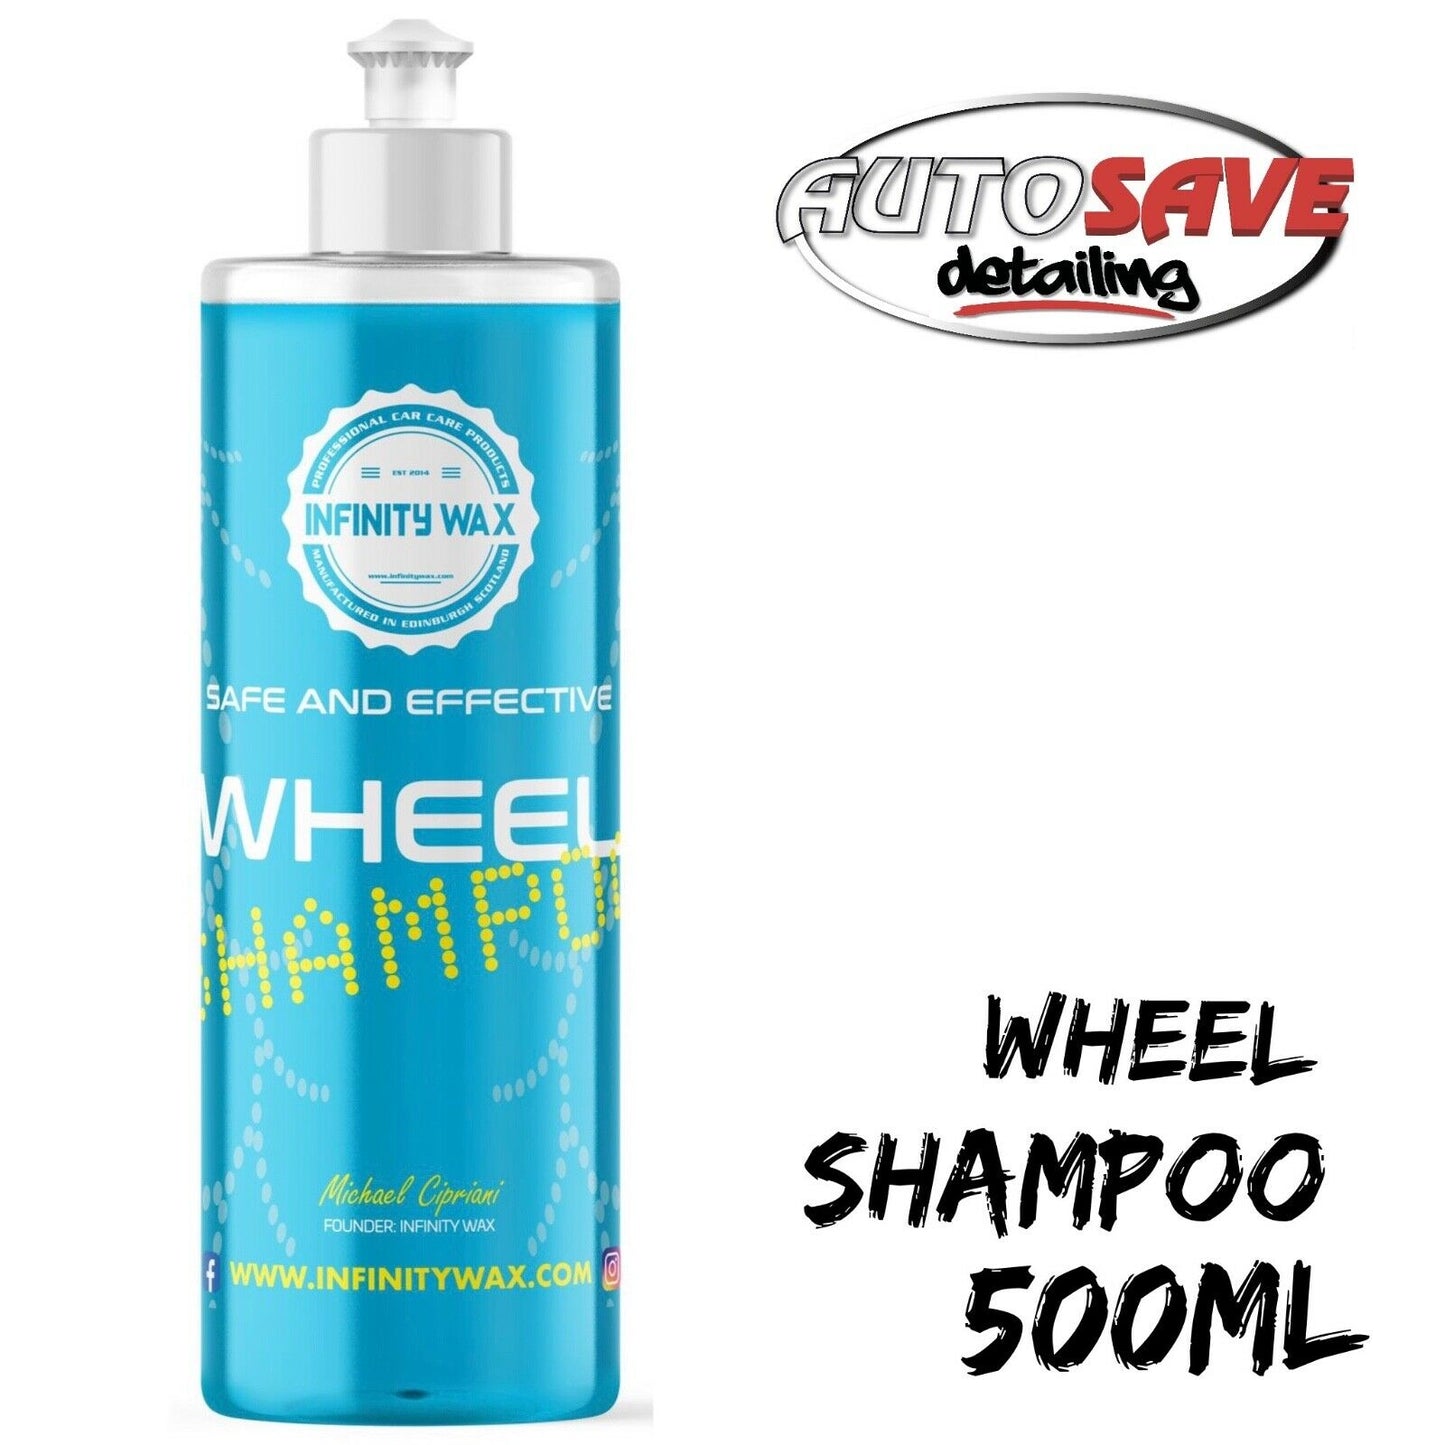 Infinity Wax WHEEL SHAMPOO 500ml Safe and effective